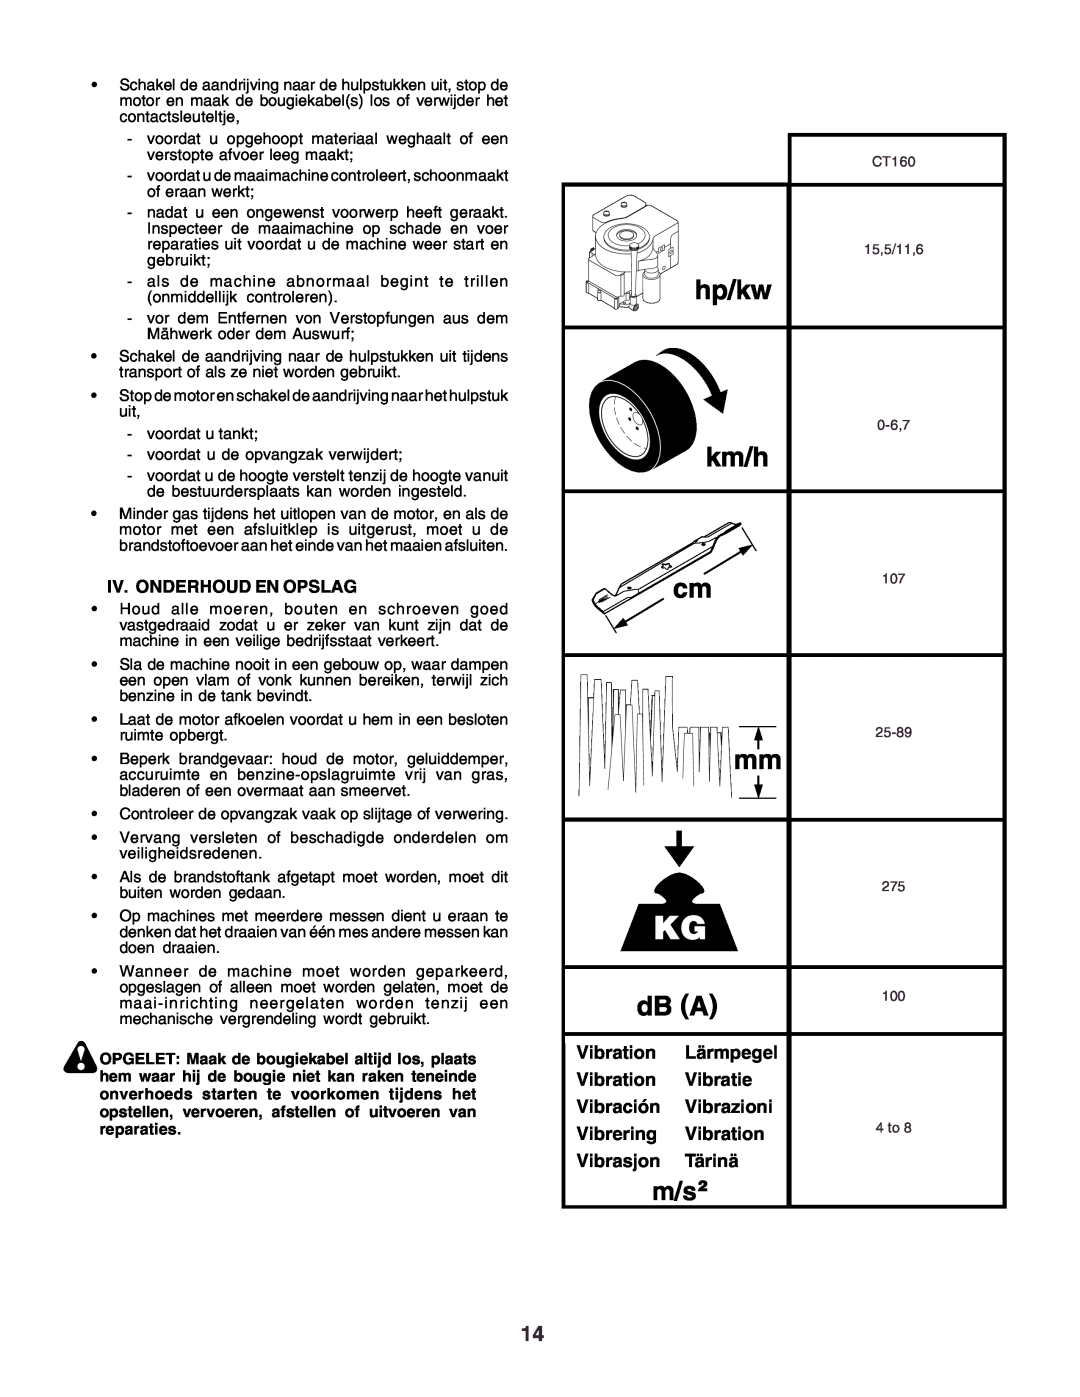 Husqvarna CT160 instruction manual Vibration, Lärmpegel, Vibratie, Vibración, Vibrazioni, Vibrering, Vibrasjon Tärinä 